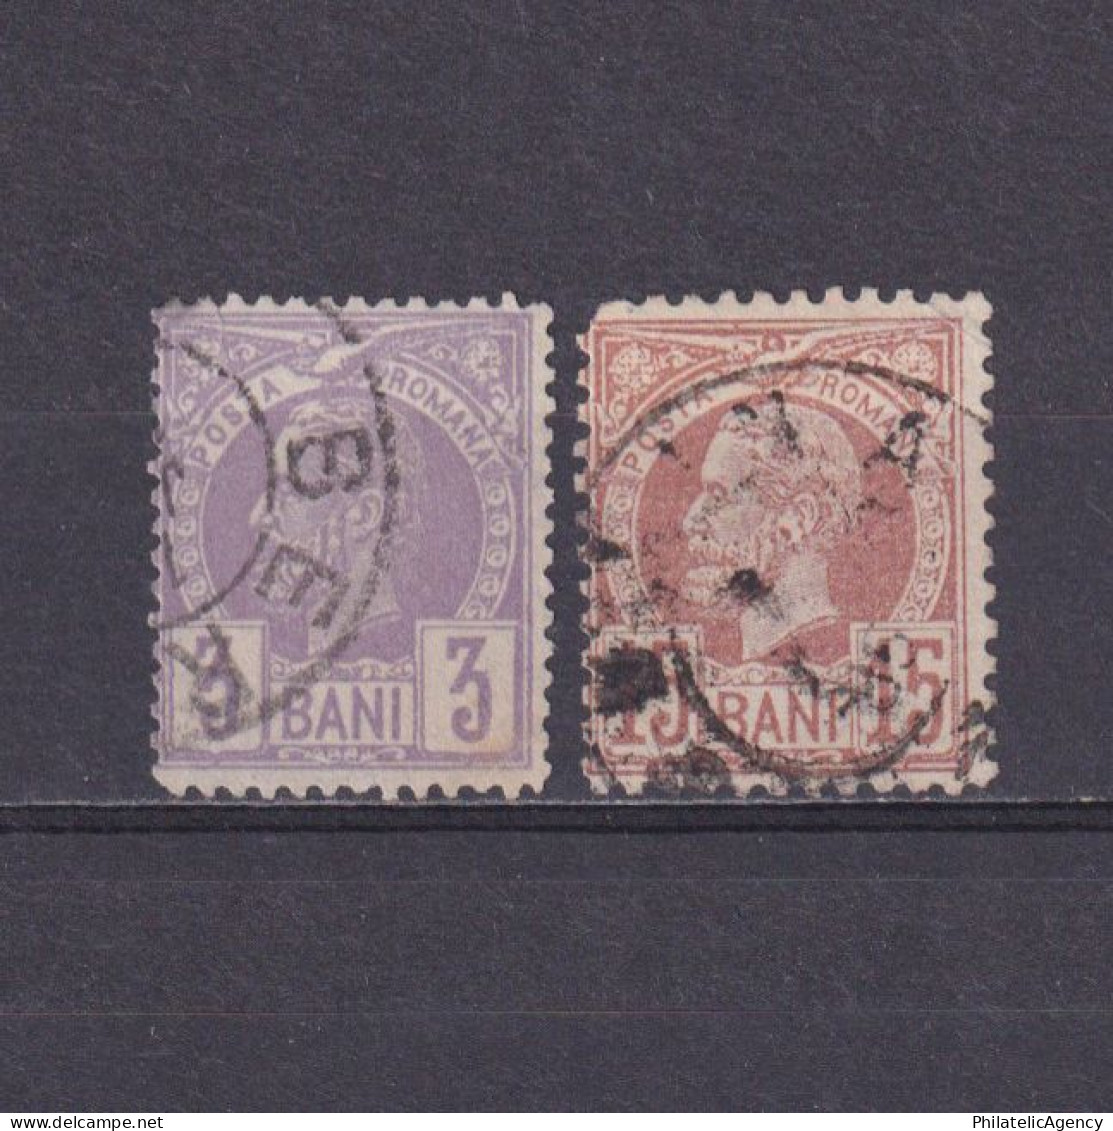 ROMANIA 1885, Sc# 76, 78, Part Set, King Carol I, Used - Used Stamps